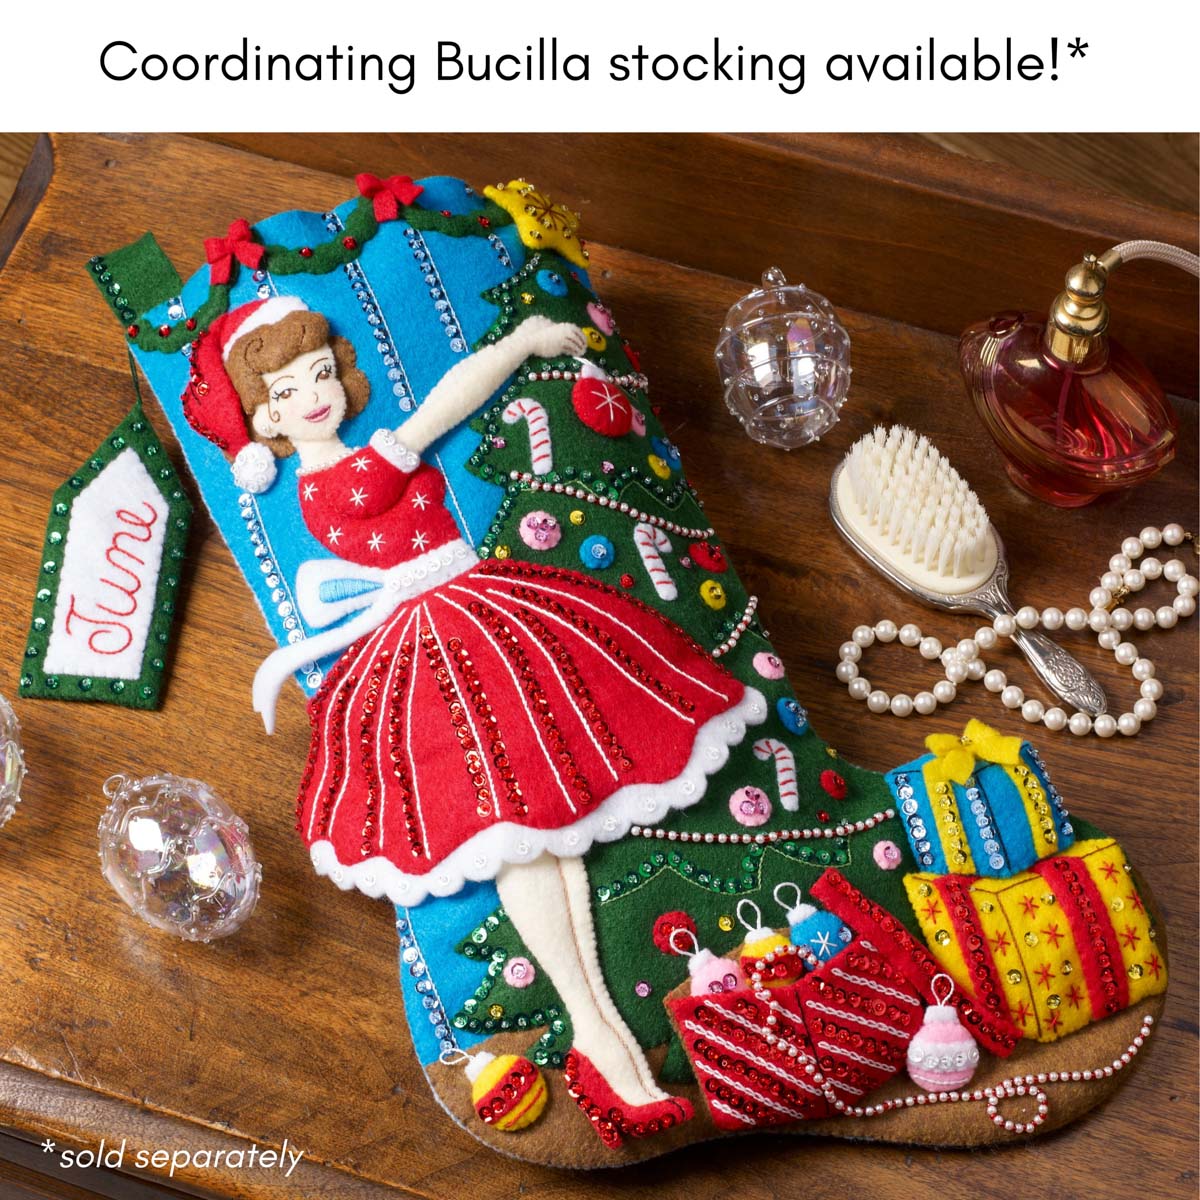 Shop Plaid Bucilla ® Seasonal - Felt - Ornament Kits - Cats in